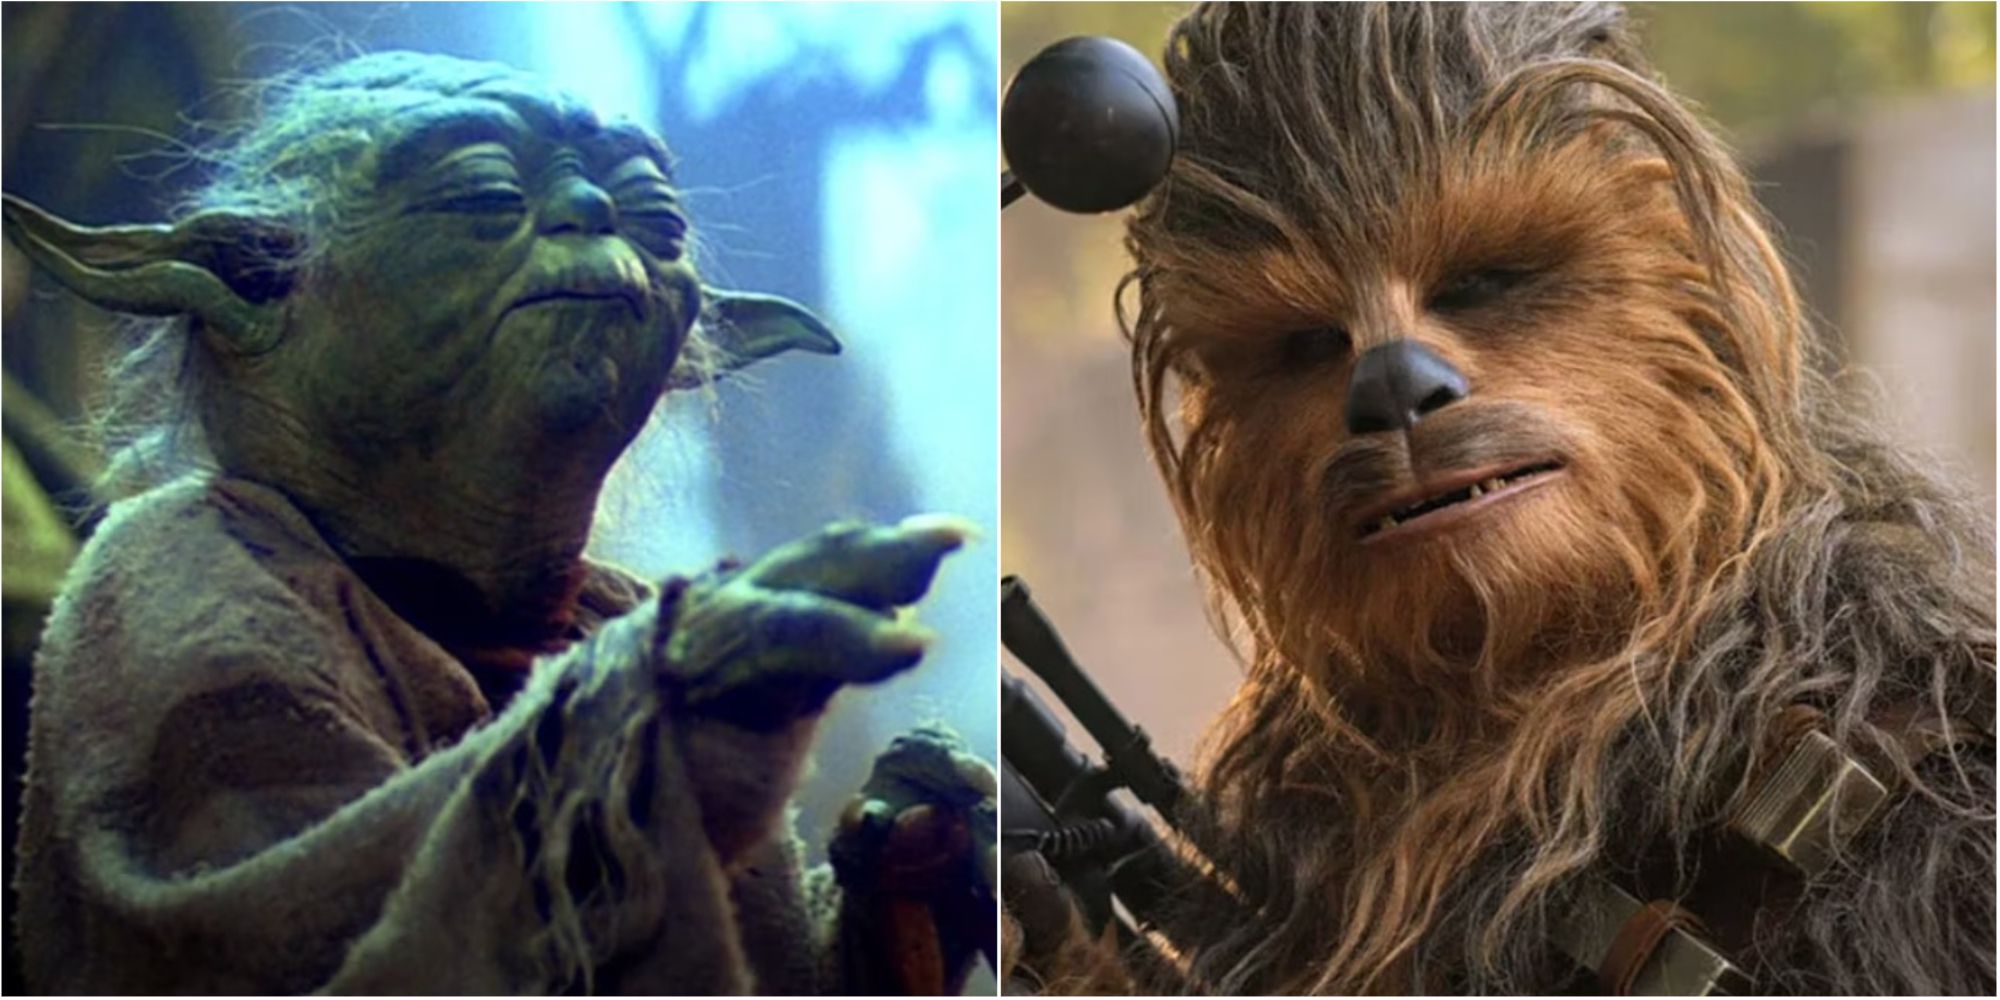 Yoda and Chewbacca in Star Wars